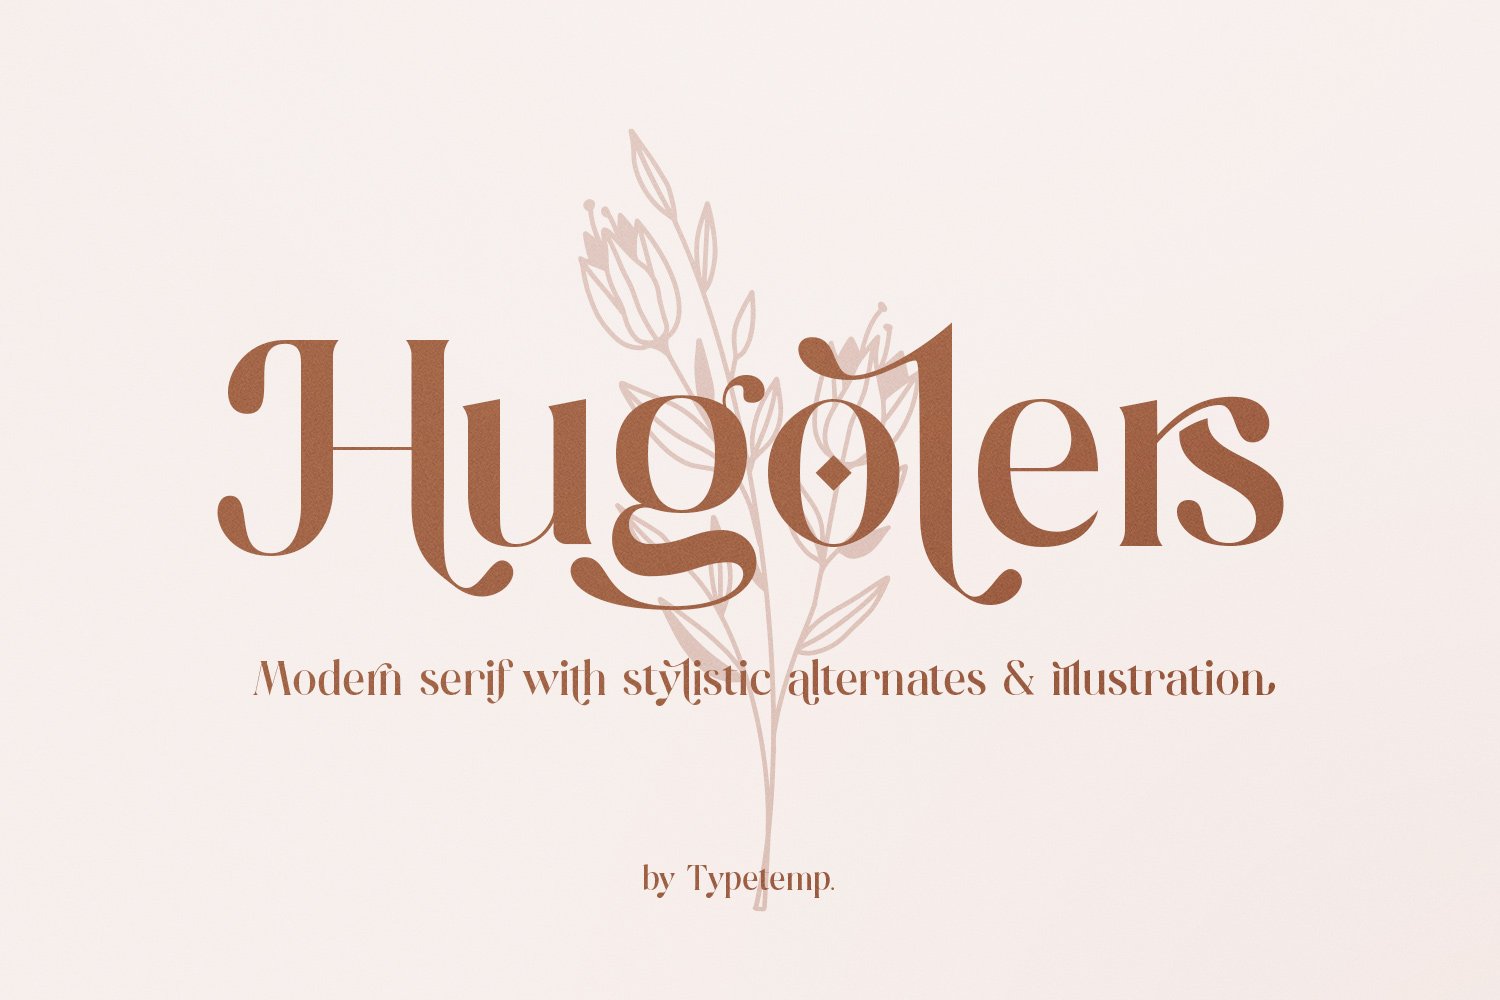 Hugolers Stylish Modern cover image.